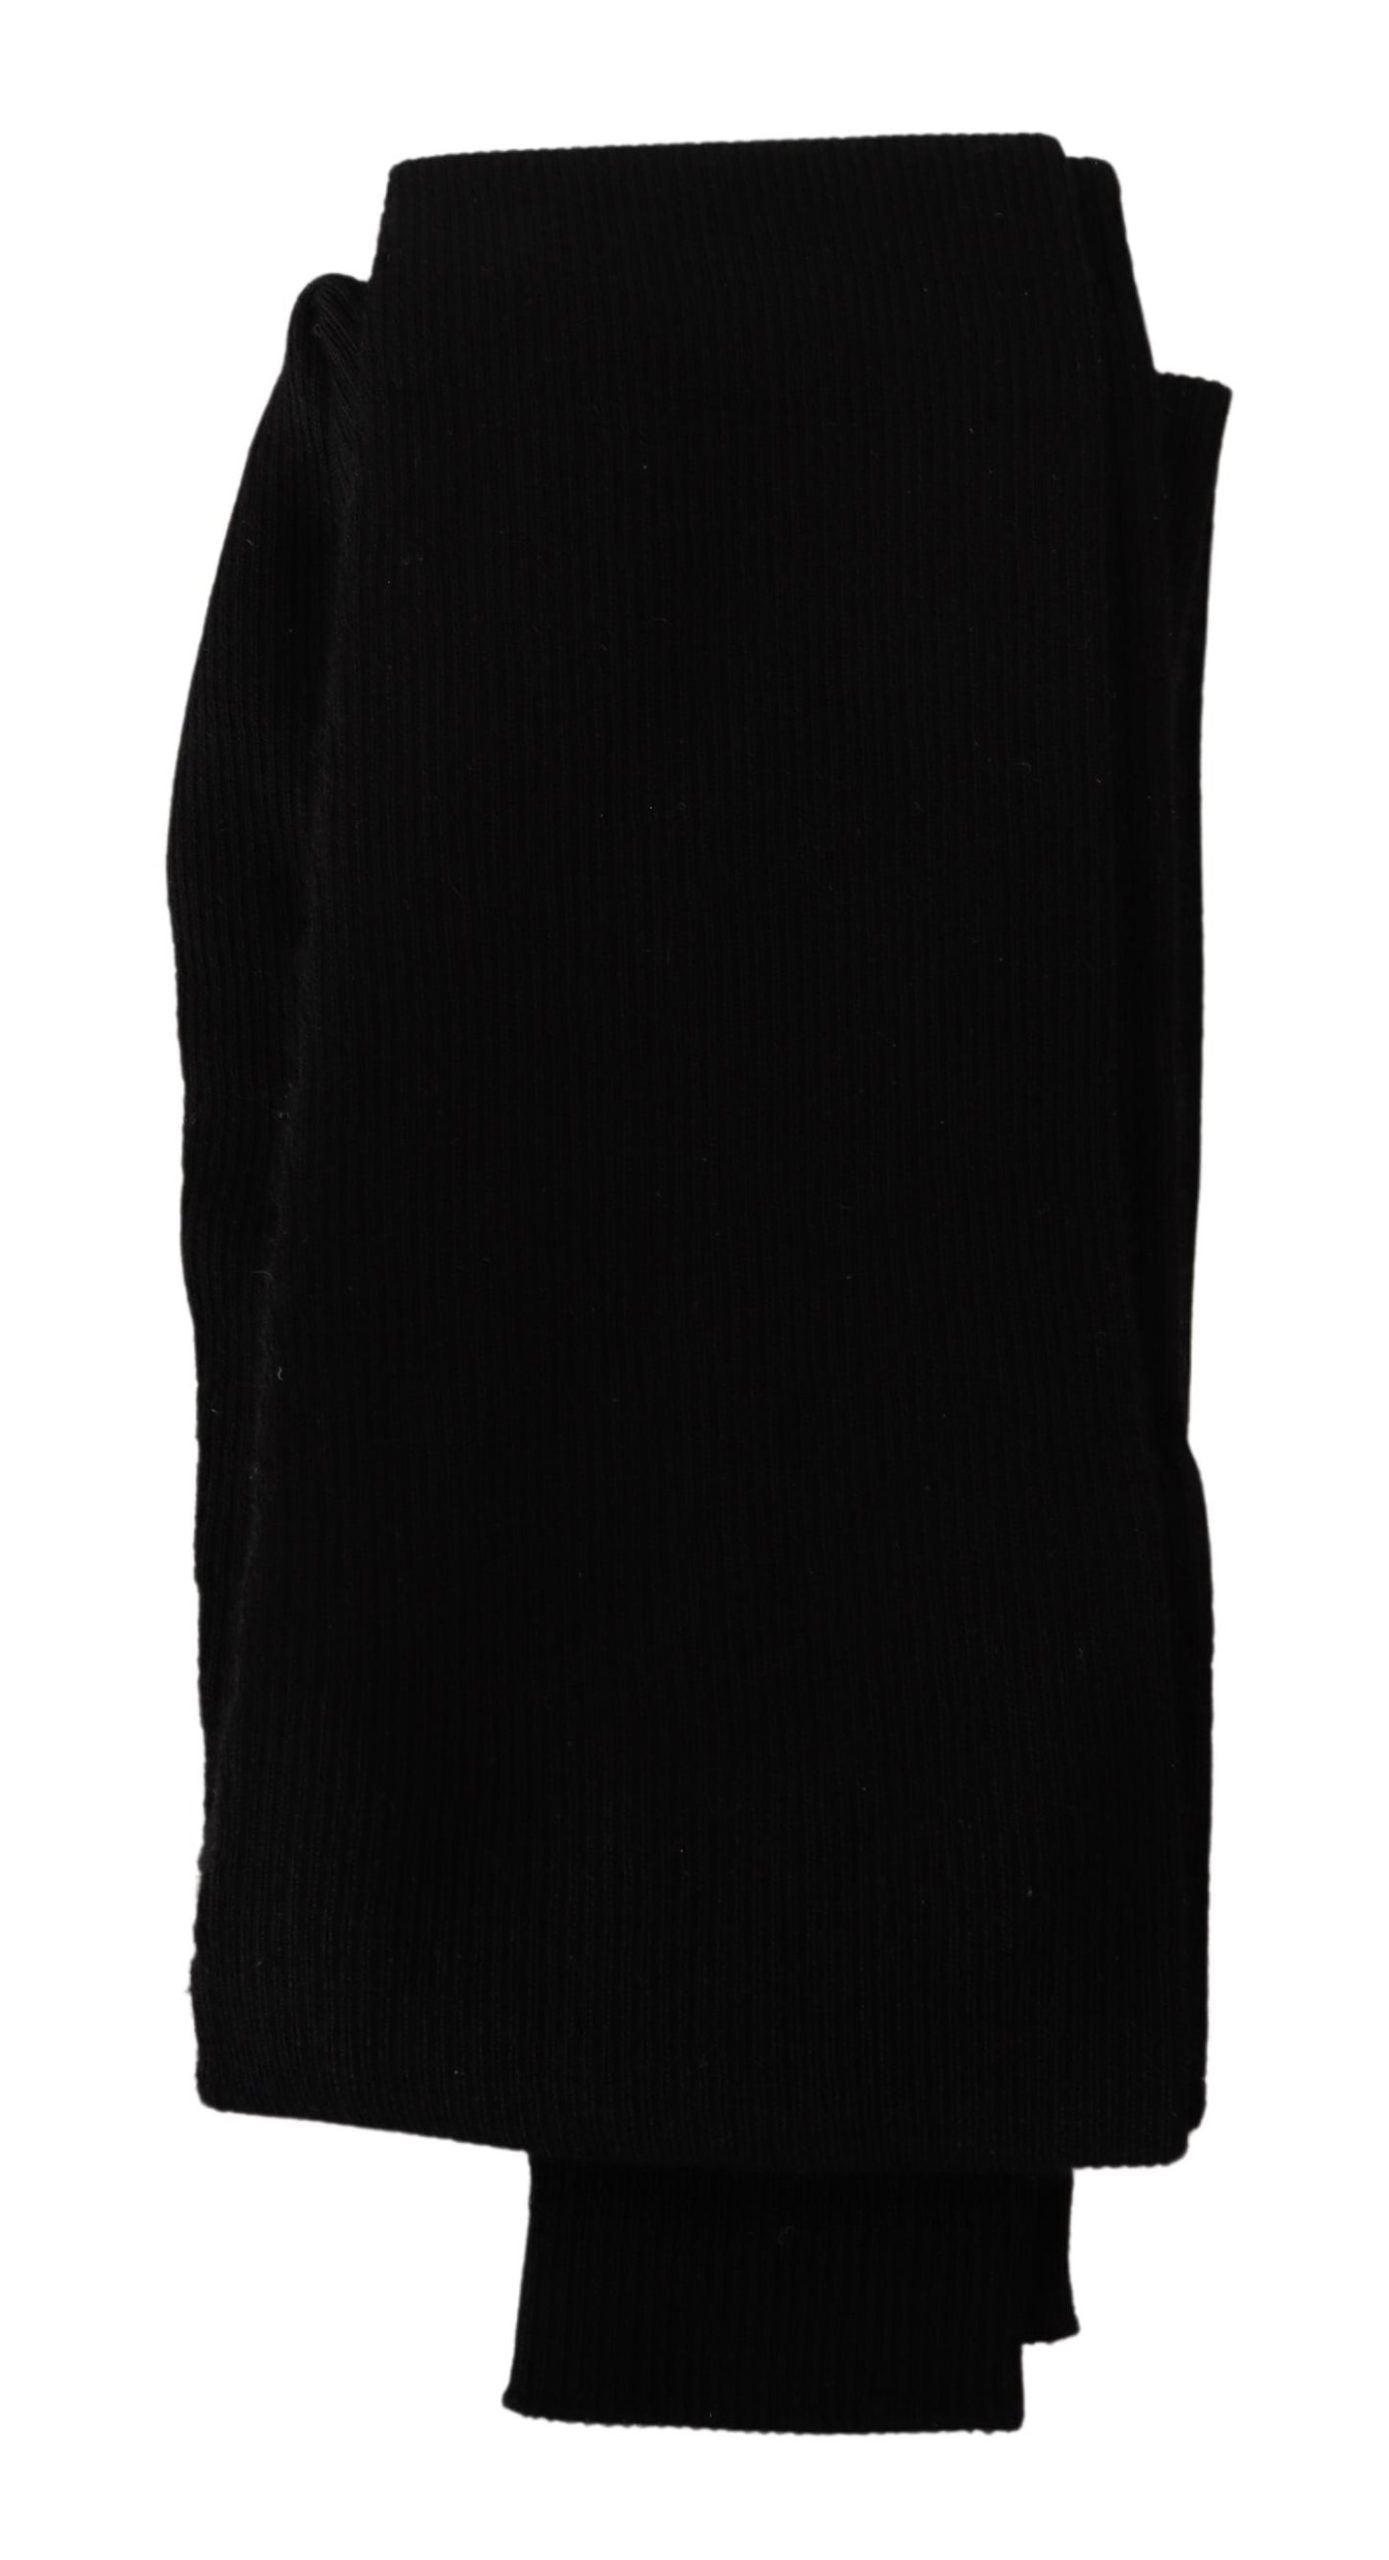 Dolce & Gabbana Black 100% Kaschmirstrumpfhocken Socken.